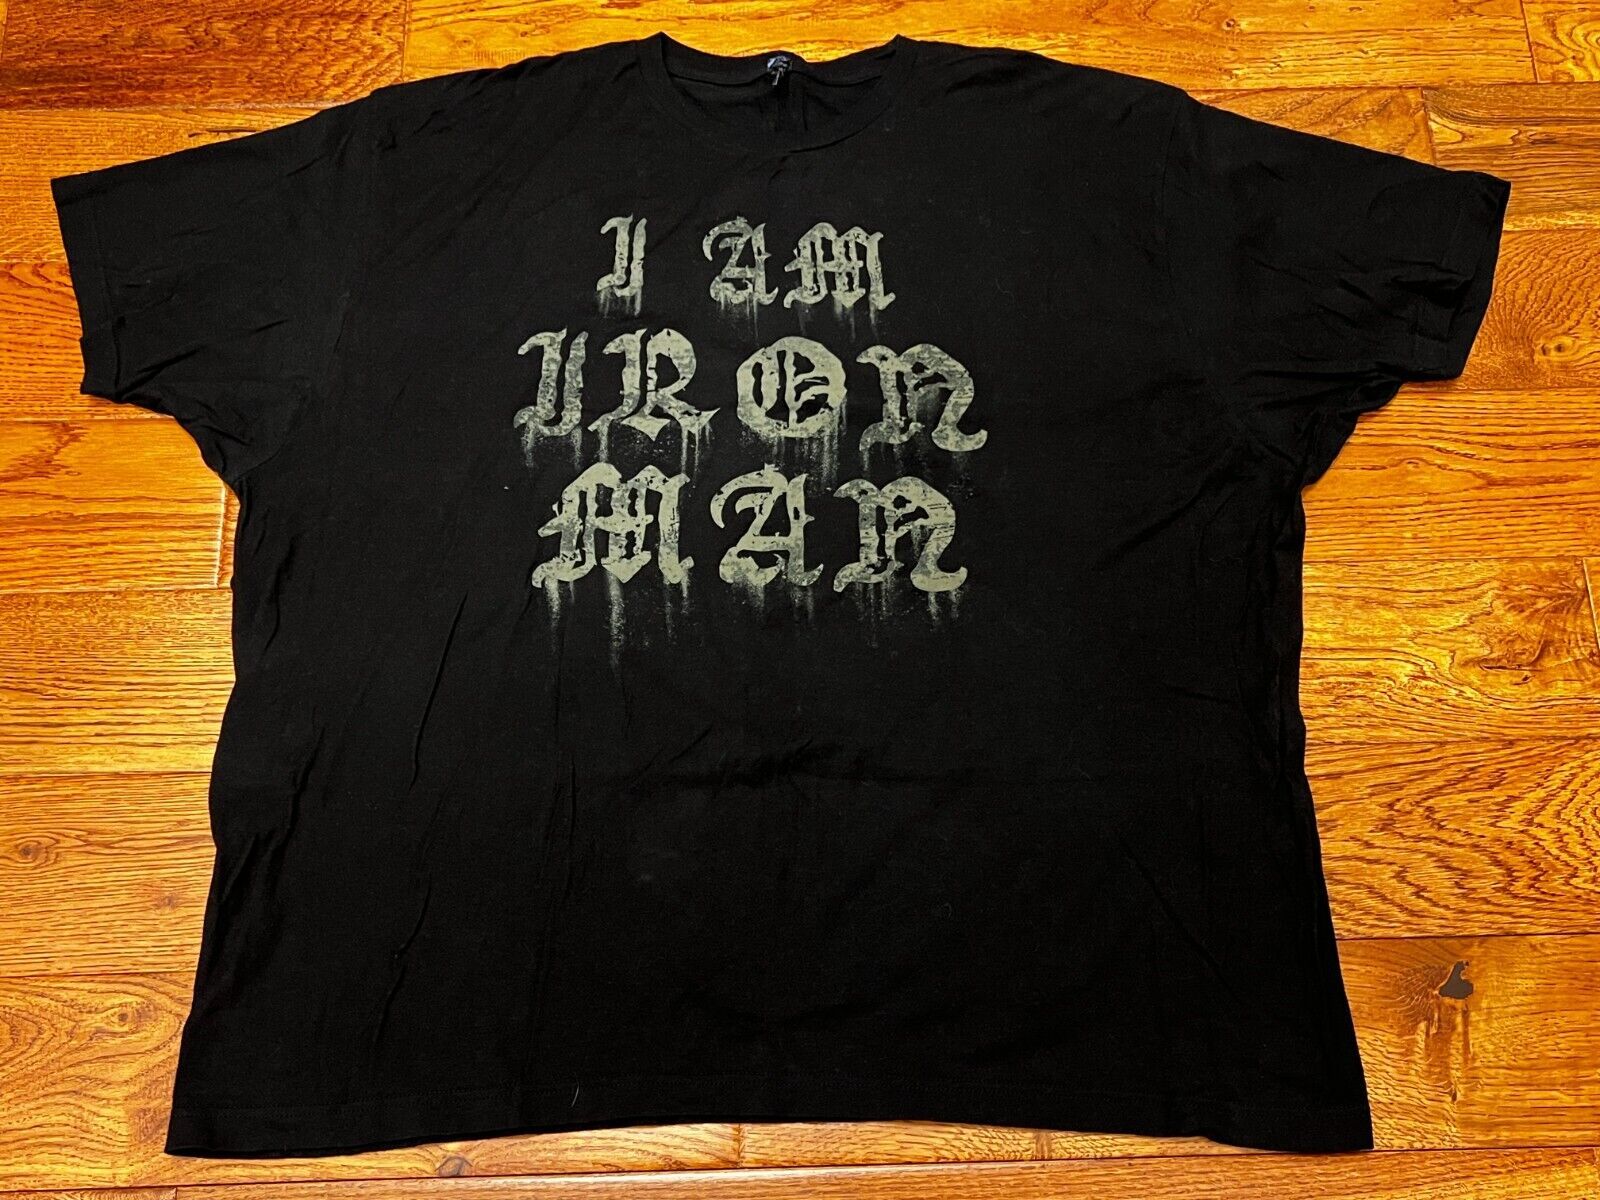 Black Sabbath: I Am Iron Man 2016 The End Tour Official T-Shirt Size XXXL 3XL - $38.69